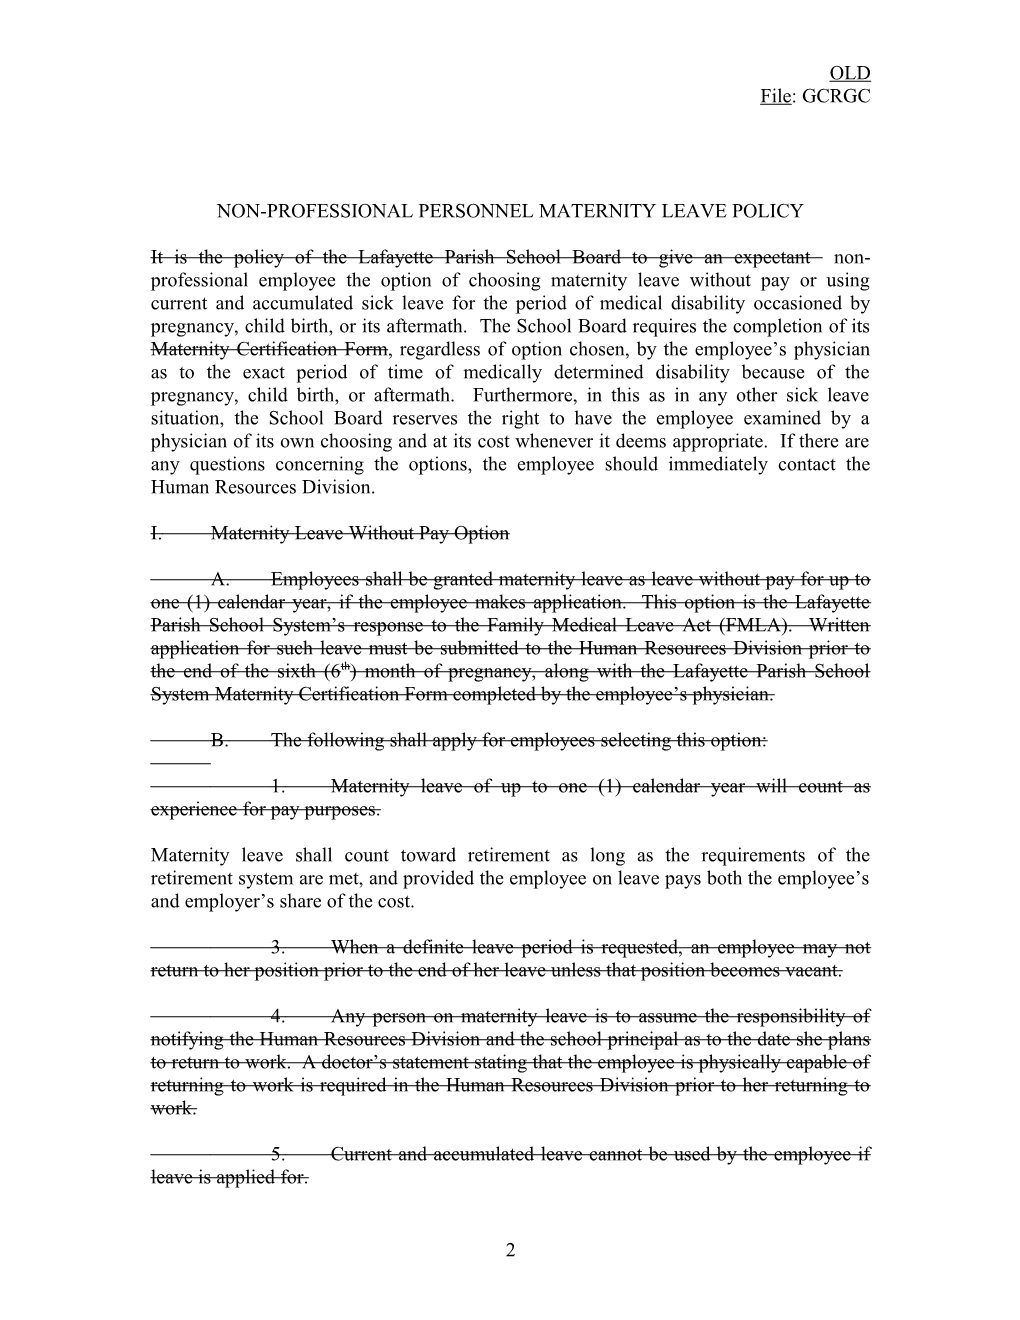 Policy File: Gcrgc Non-Professional Personnel Maternity Leave Policy